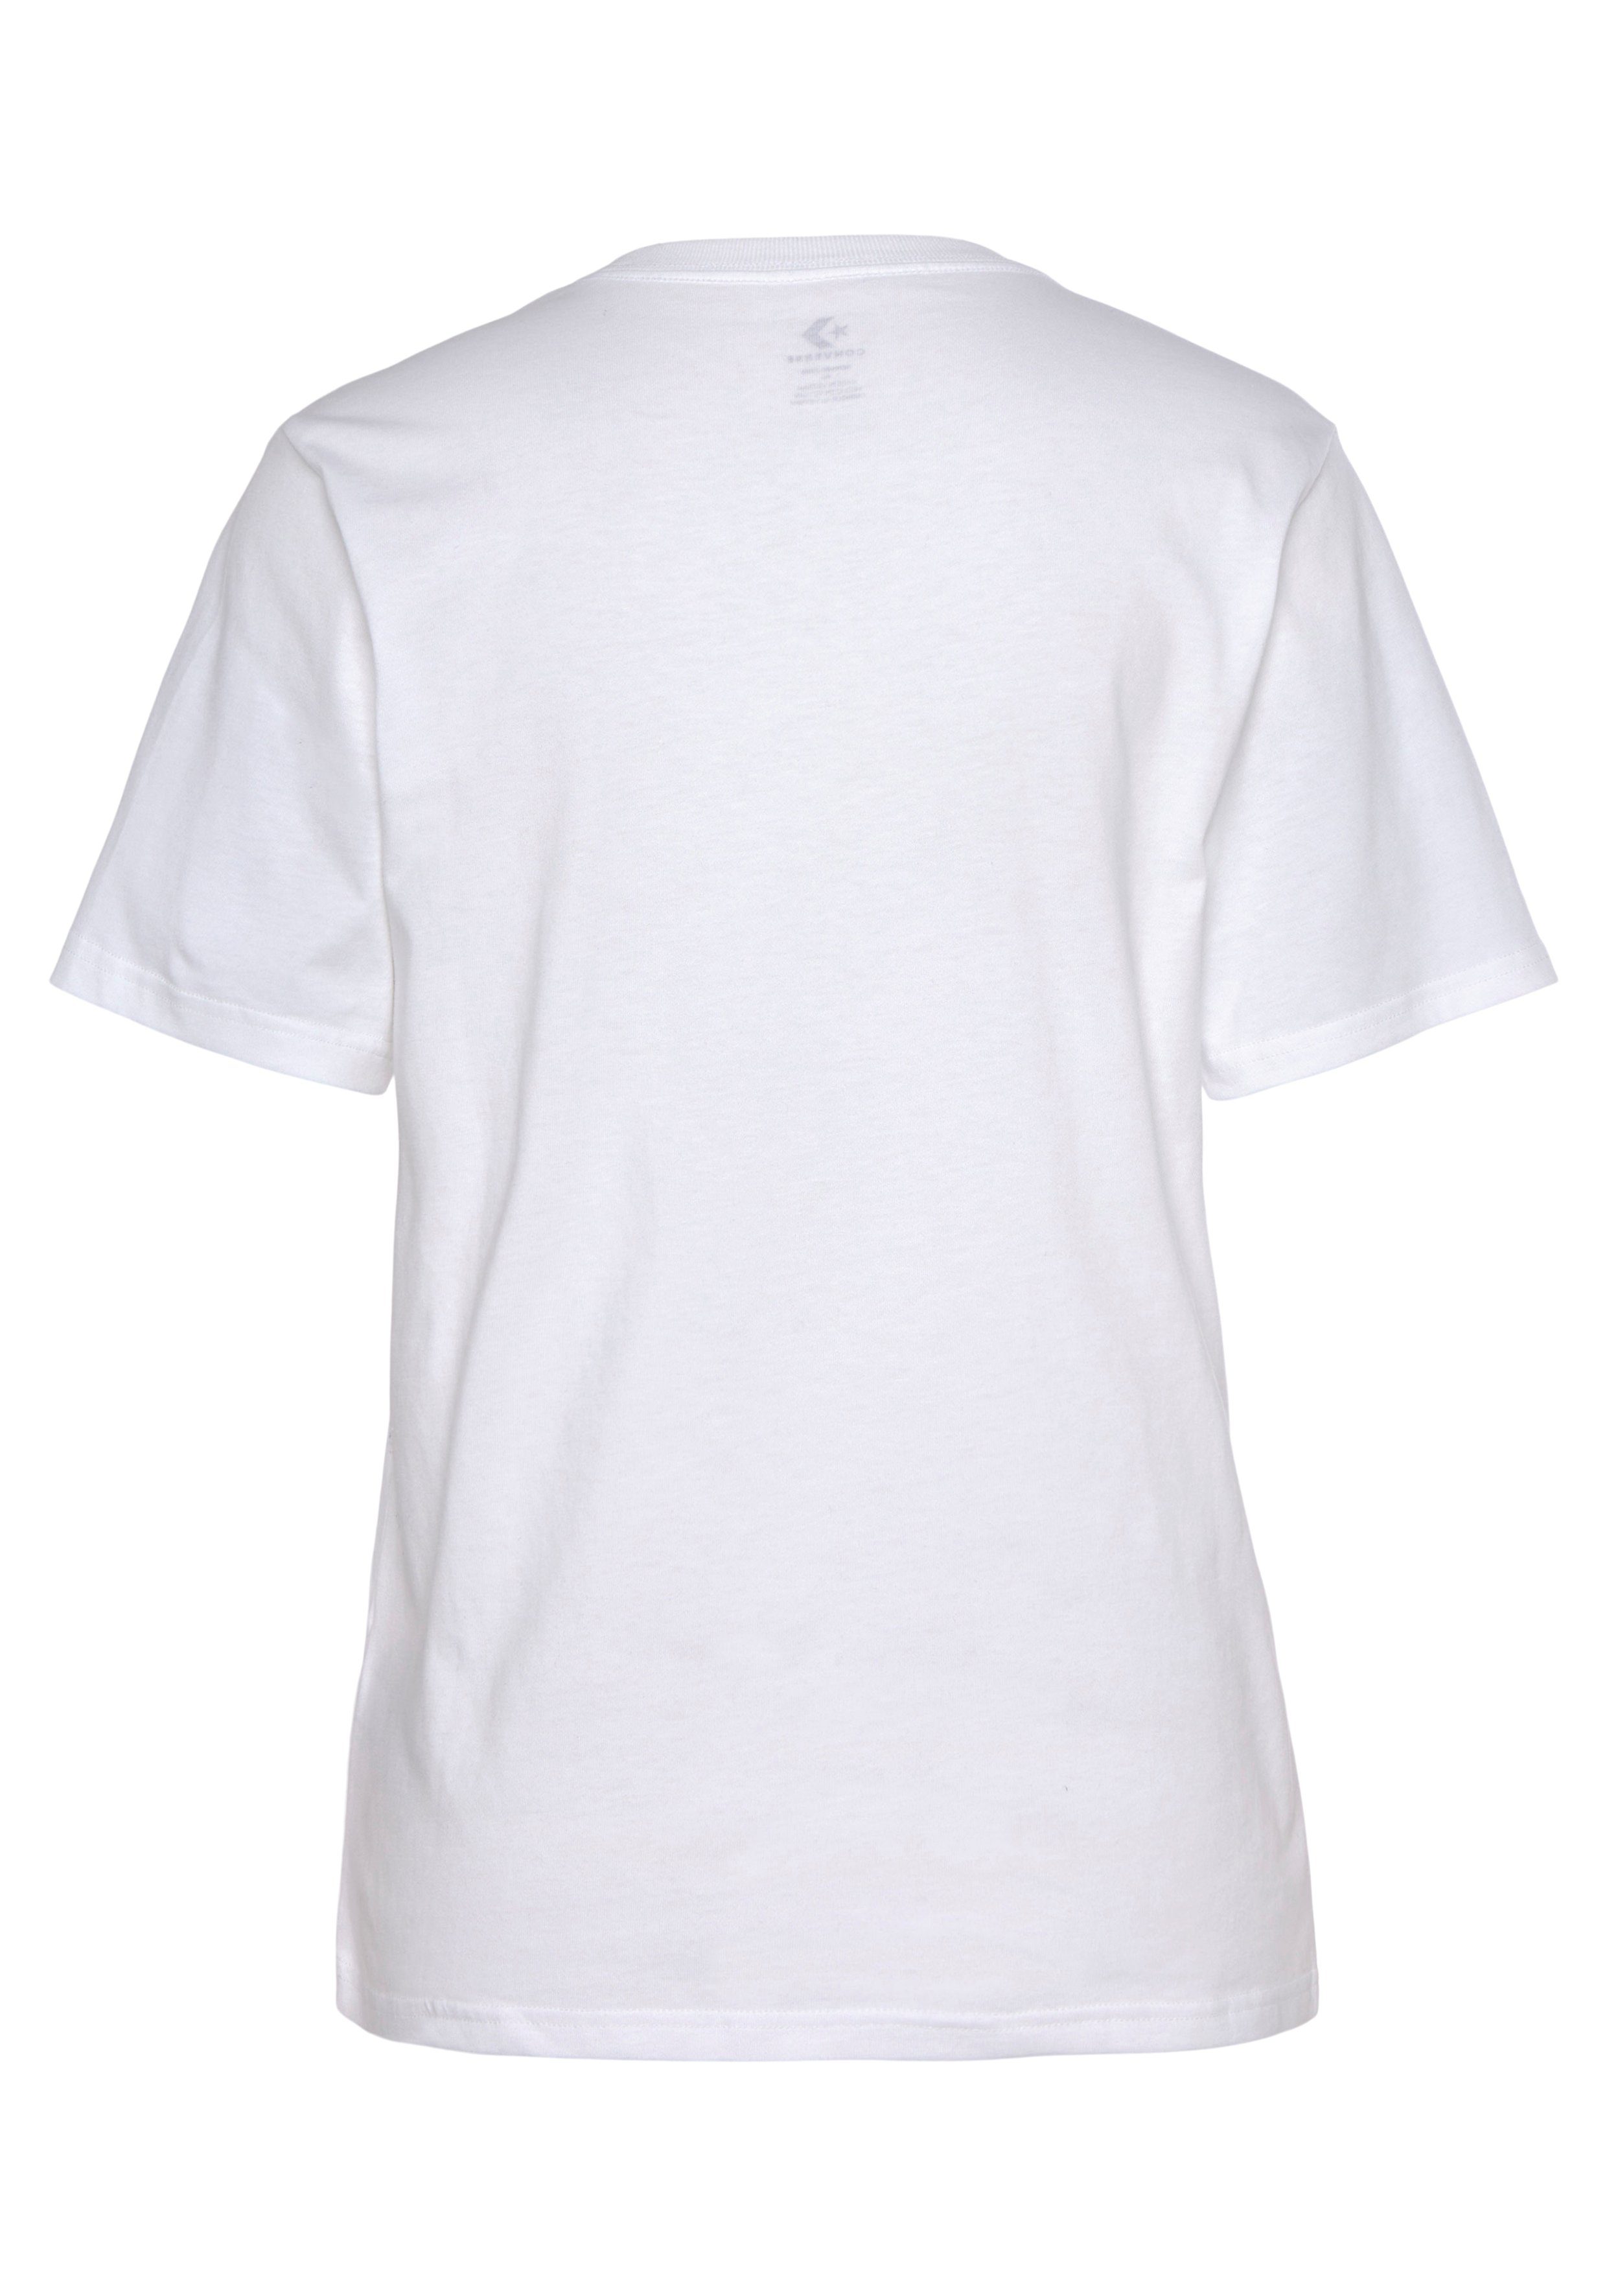 T-SHIRT Converse STAR T-Shirt GO-TO ALL COASTAL weiß